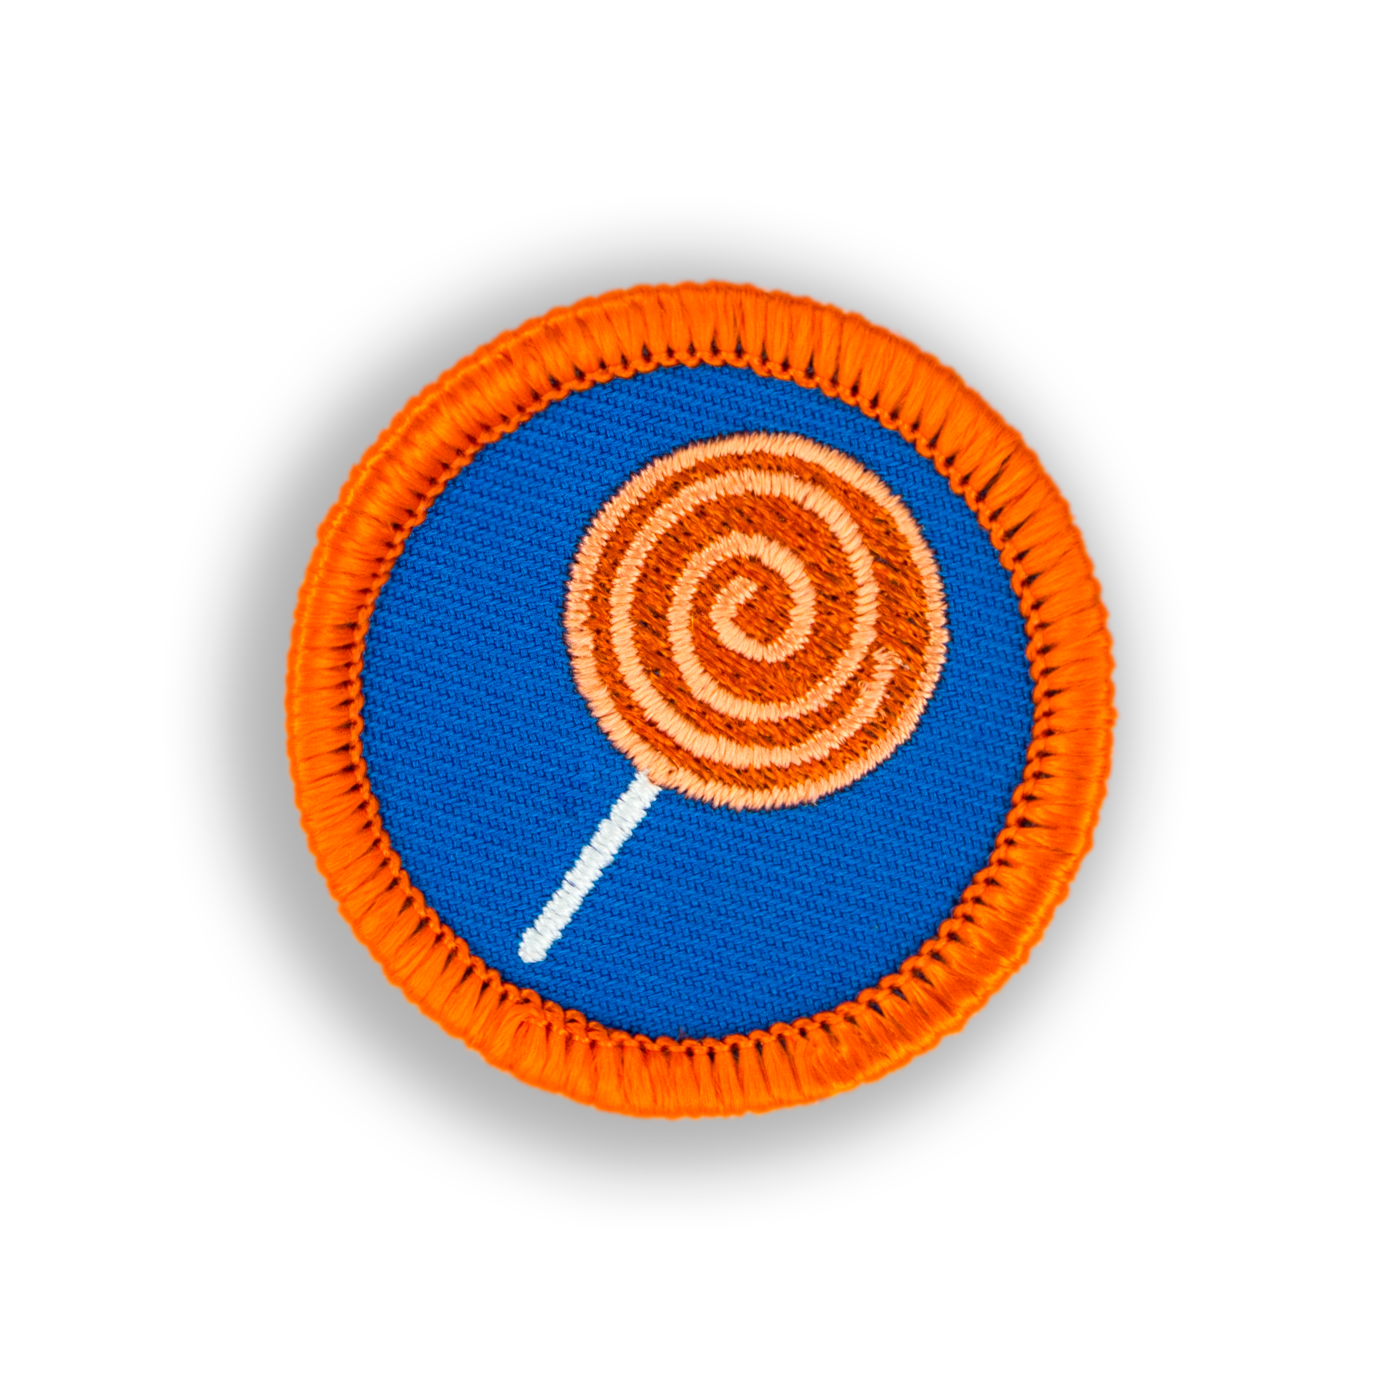 Lollipop Patch | Demerit Wear - Fake Merit Badges